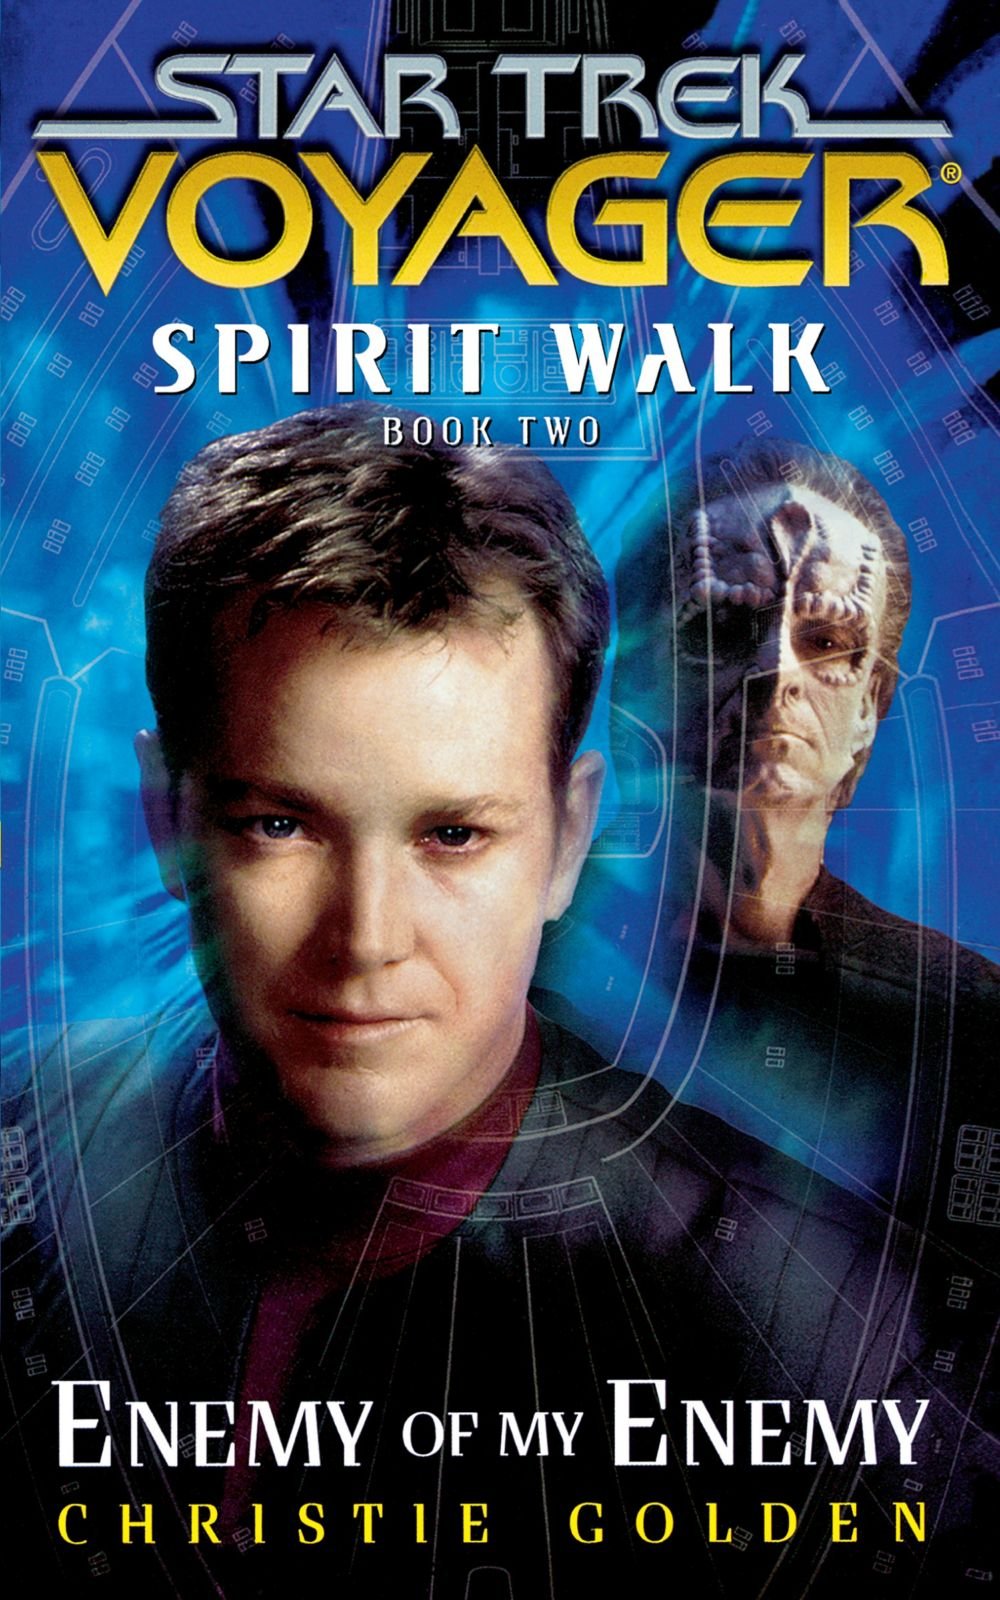 “Star Trek: Voyager: Spirit Walk Book 2: Enemy of My Enemy” Review by Treklit.com